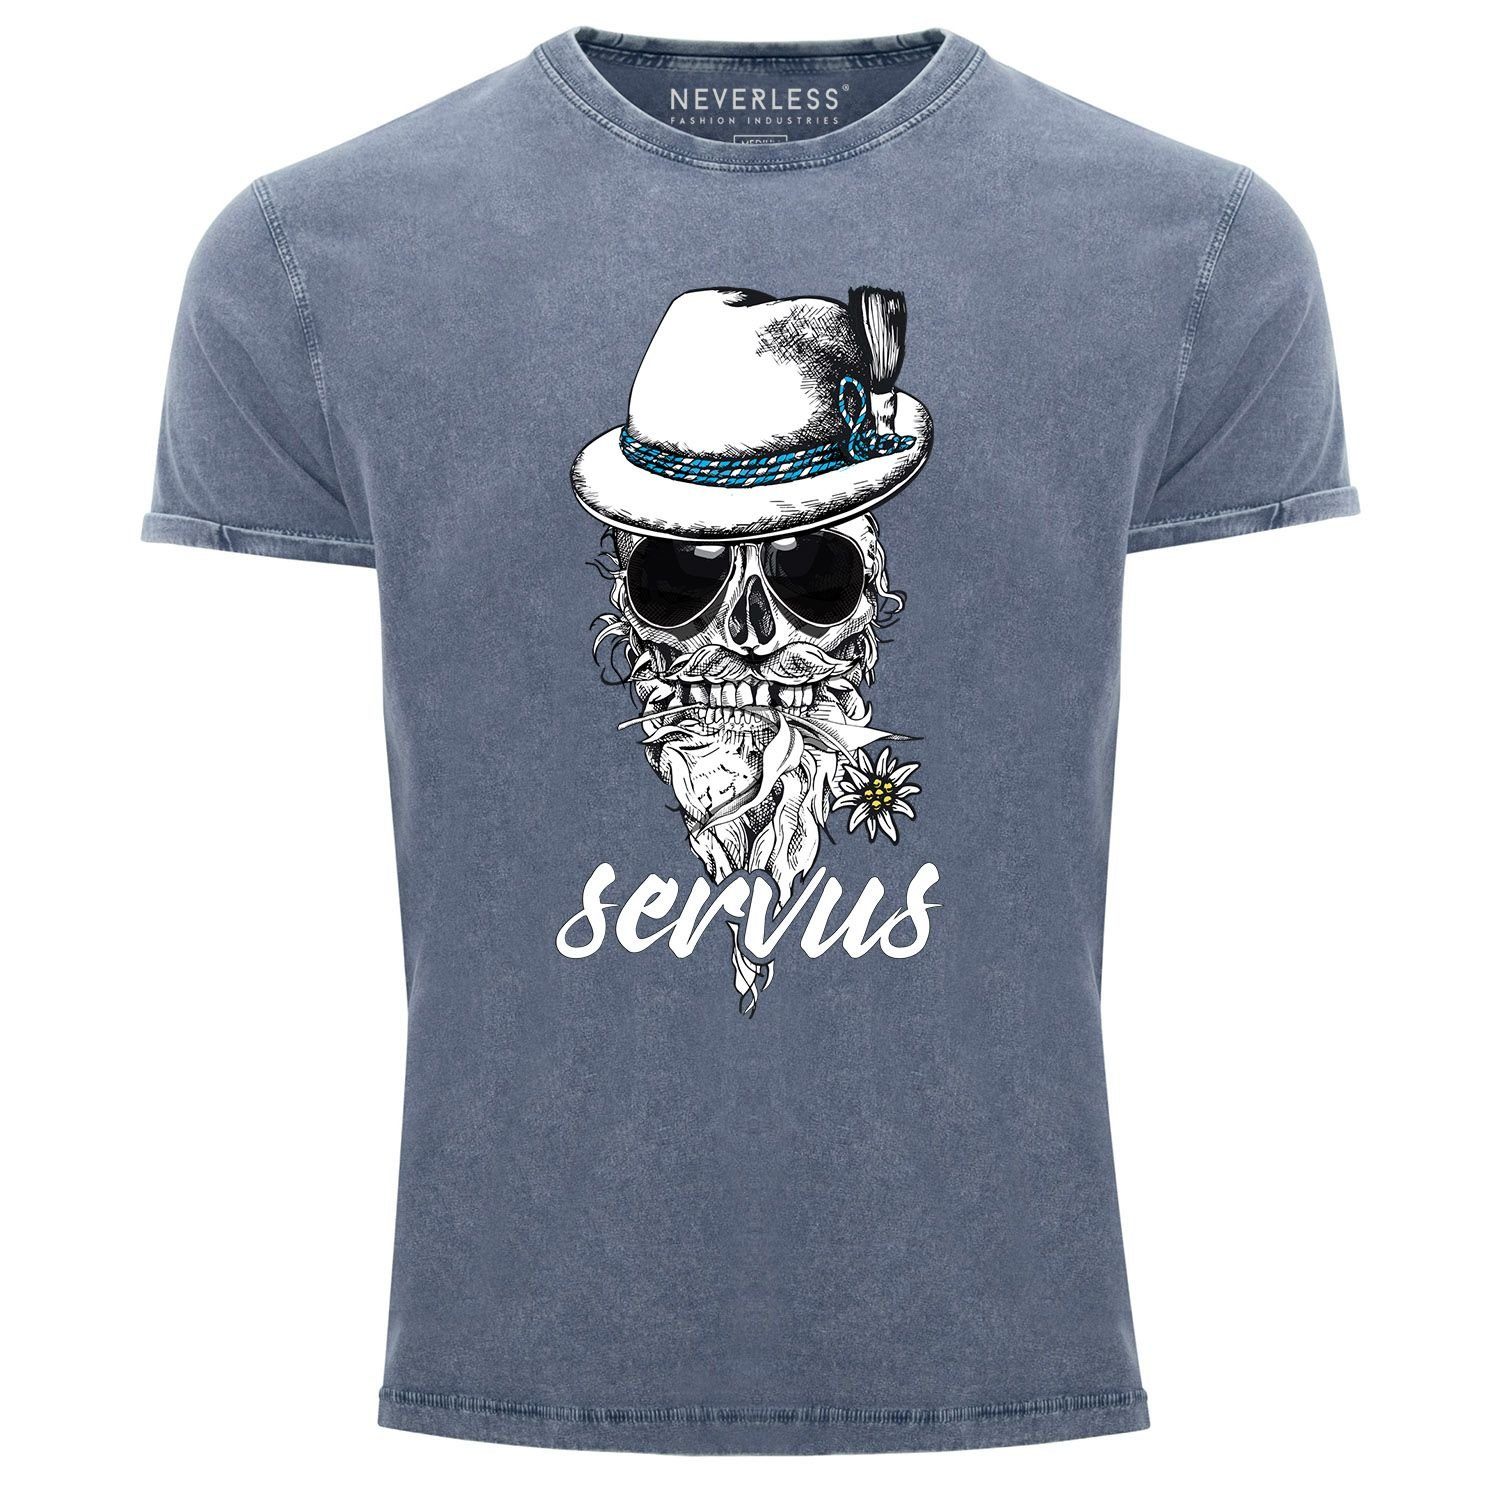 Neverless Print-Shirt Cooles, lustiges Angesagtes Herren T-Shirt Vintage Shirt Servus Skull Totenkopf Aufdruck Used Look Slim Fit Neverless® mit Print blau